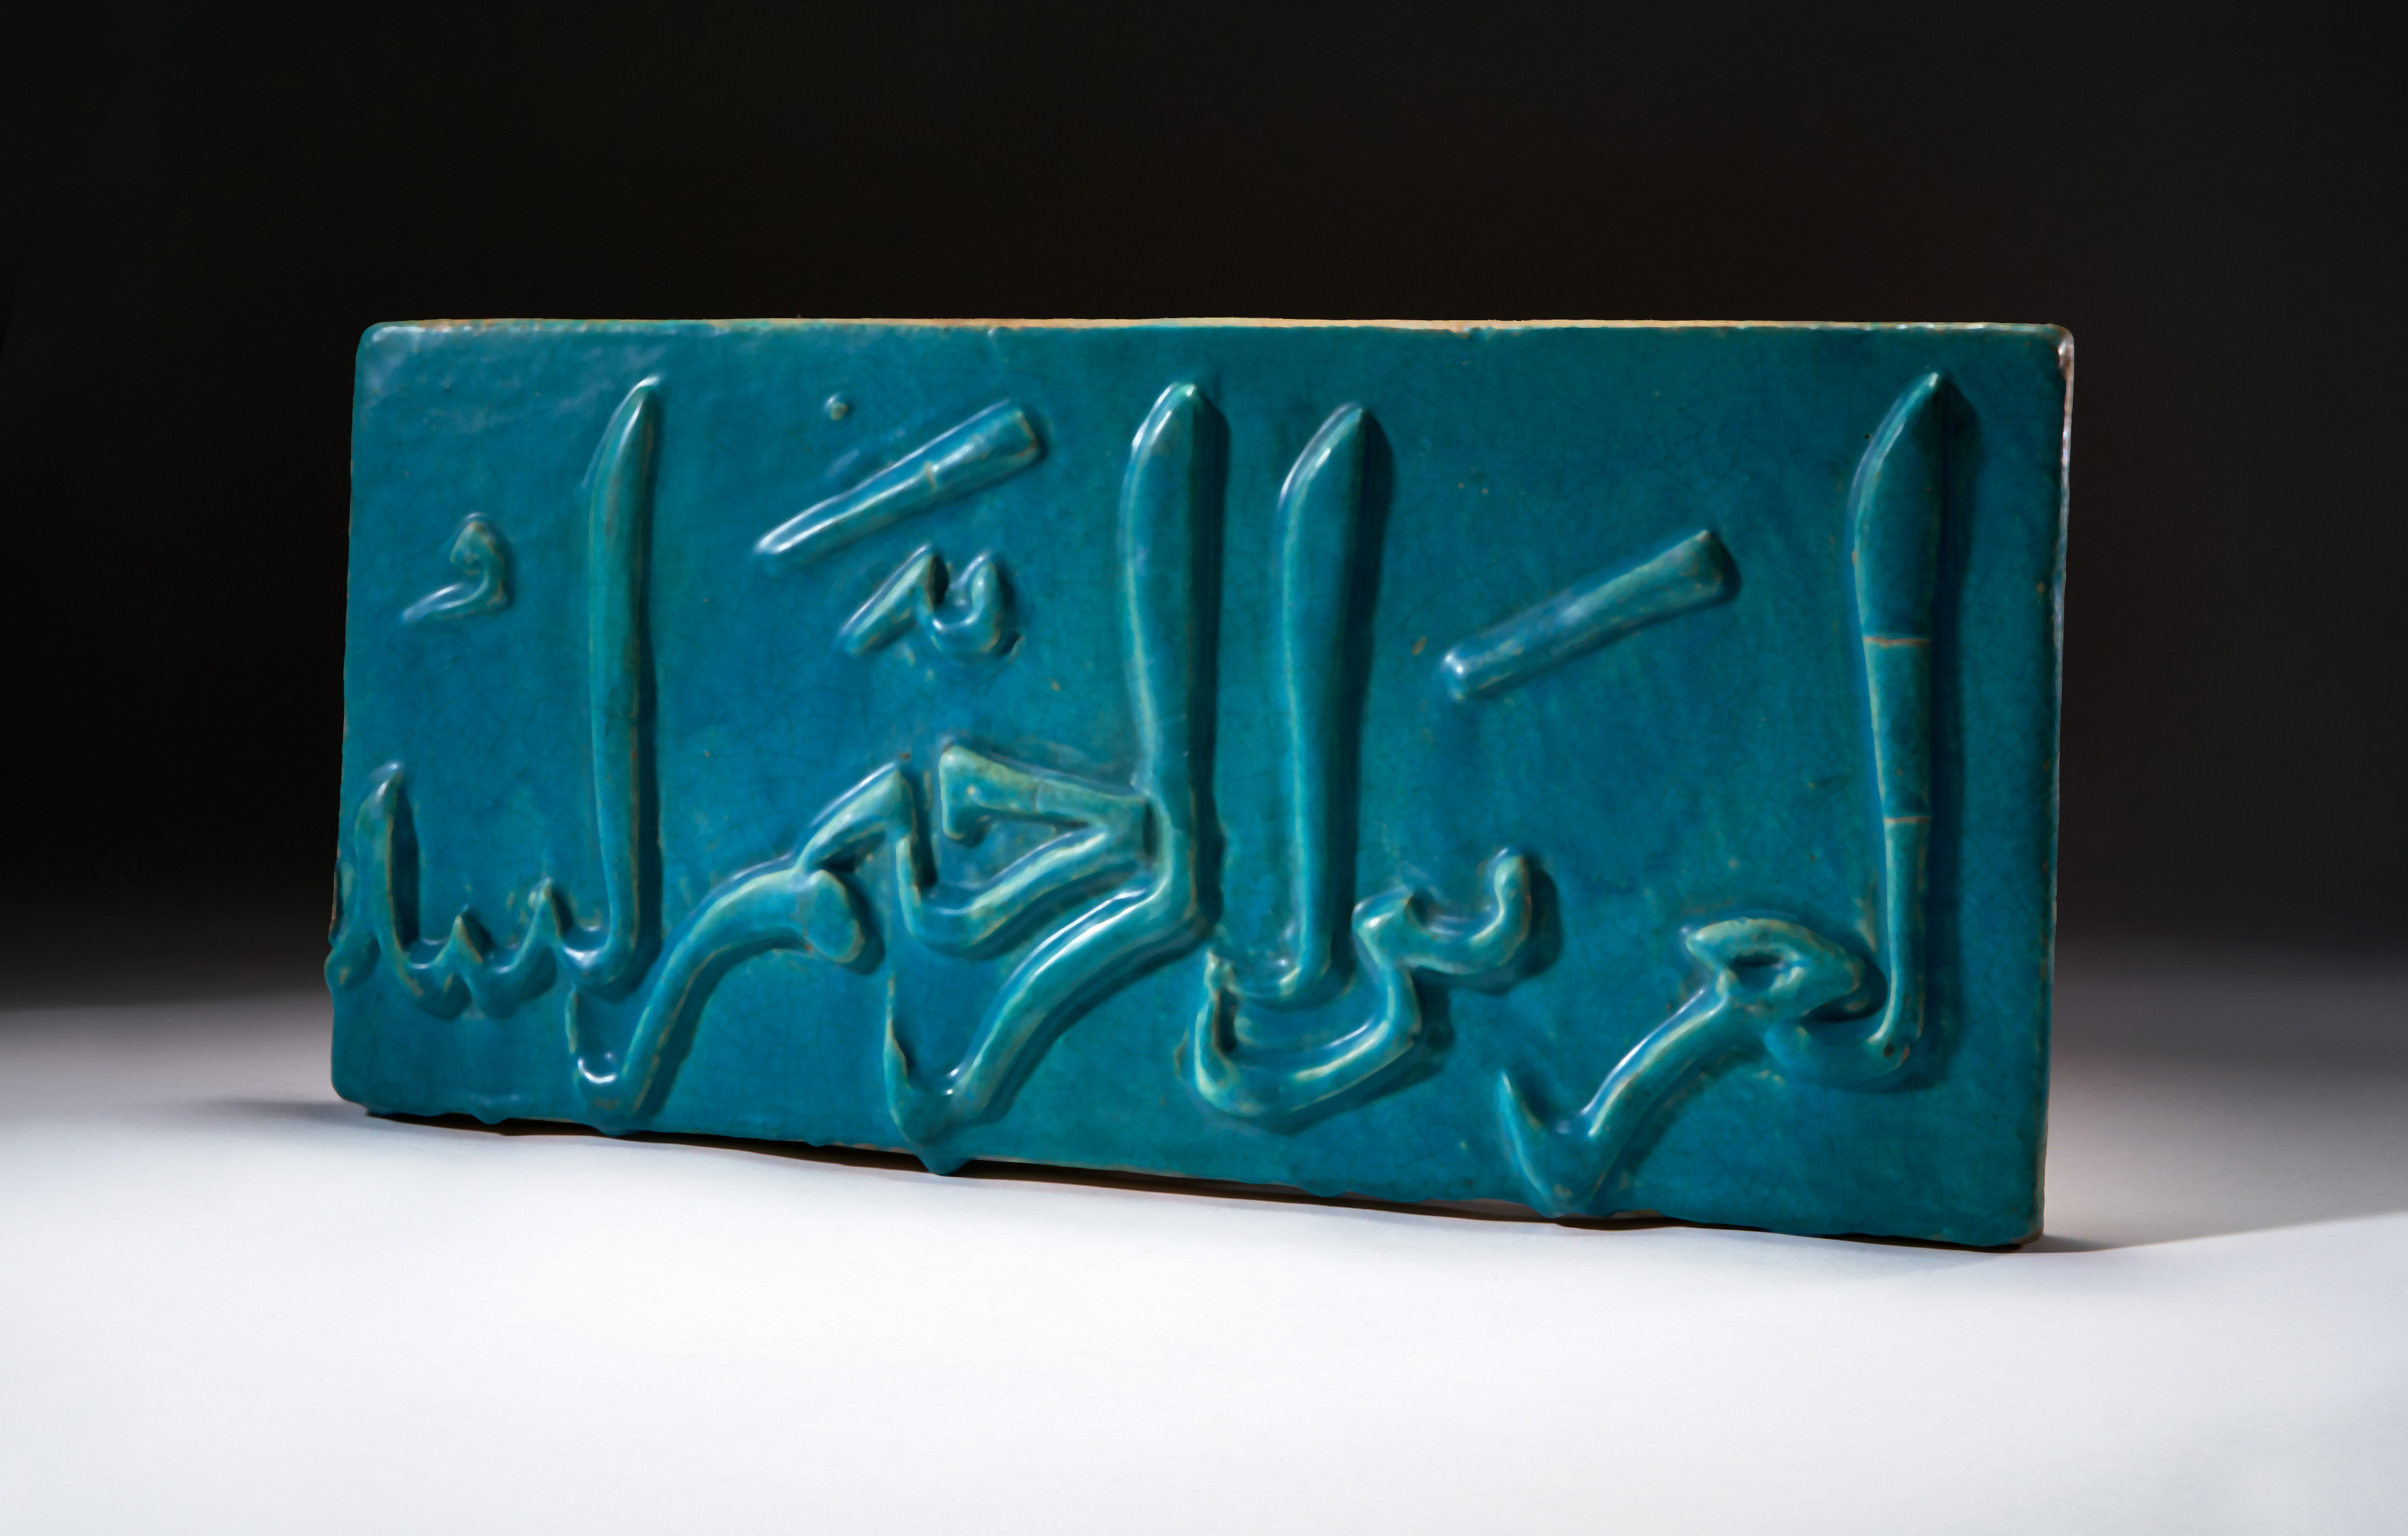 A TURQUOISE GLAZED CALLIGRAPHY TILE, KASHAN, CIRCA 12TH CENTURY, PERSIA